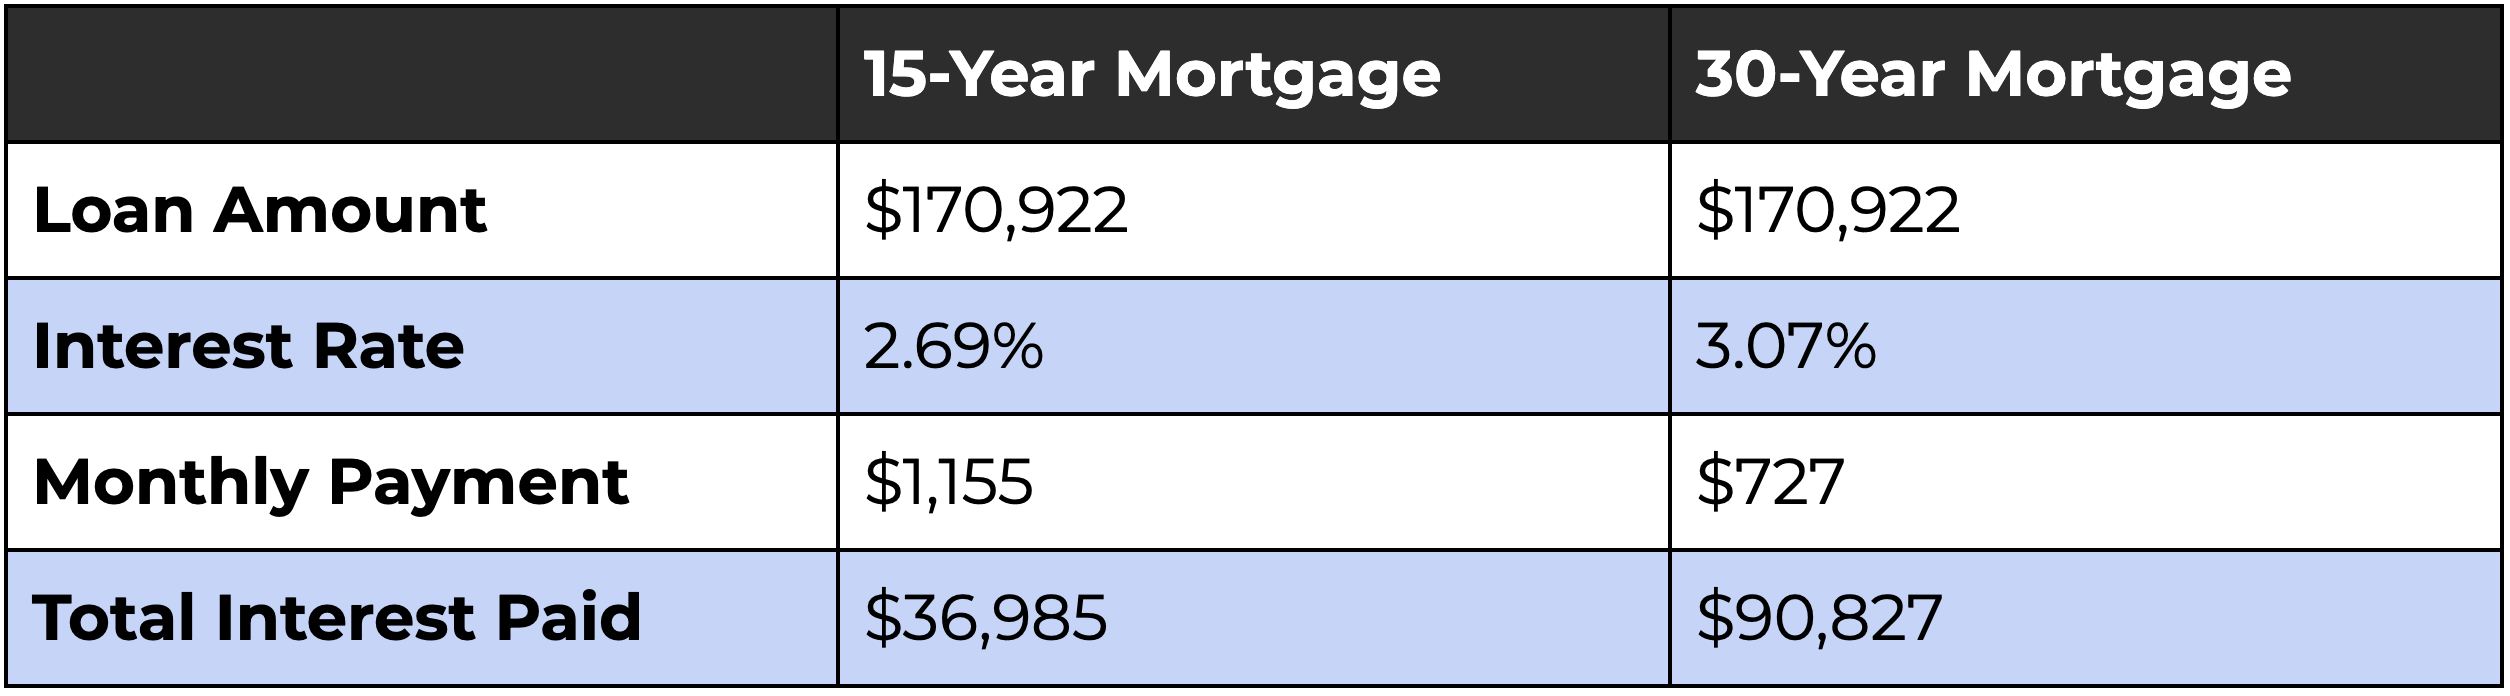 15-Year Mortgage vs 30-Year Mortgage